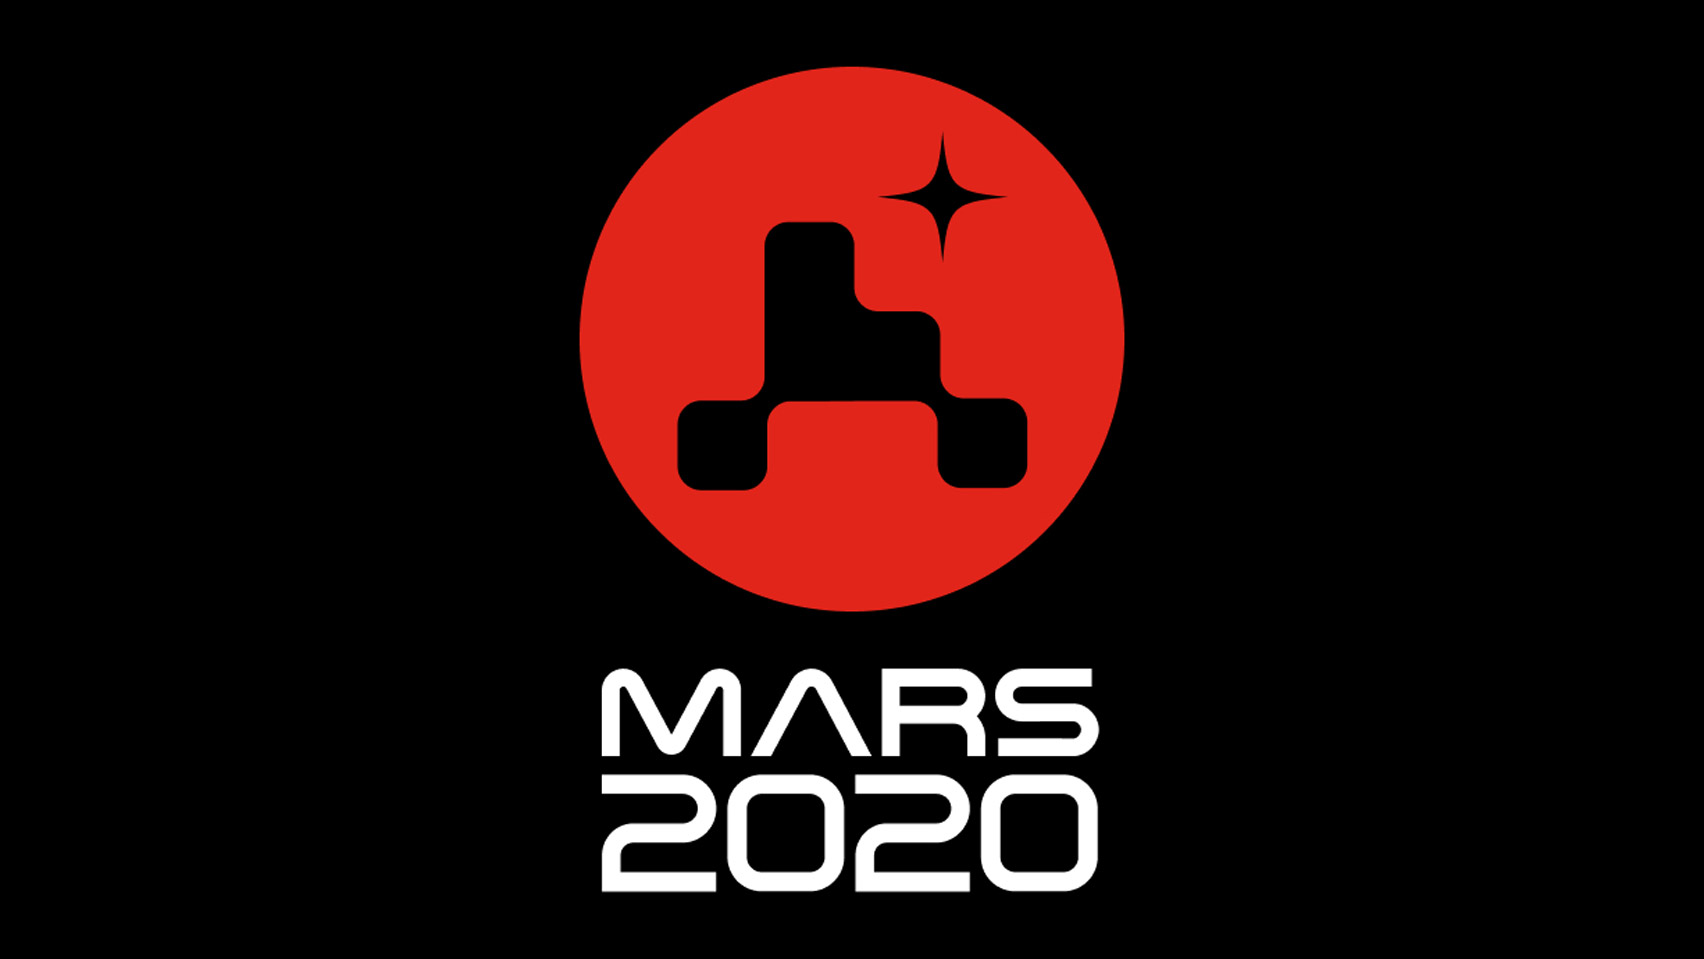 NASA 마스 2020 미션을 위한 미니멀 플랫 로고